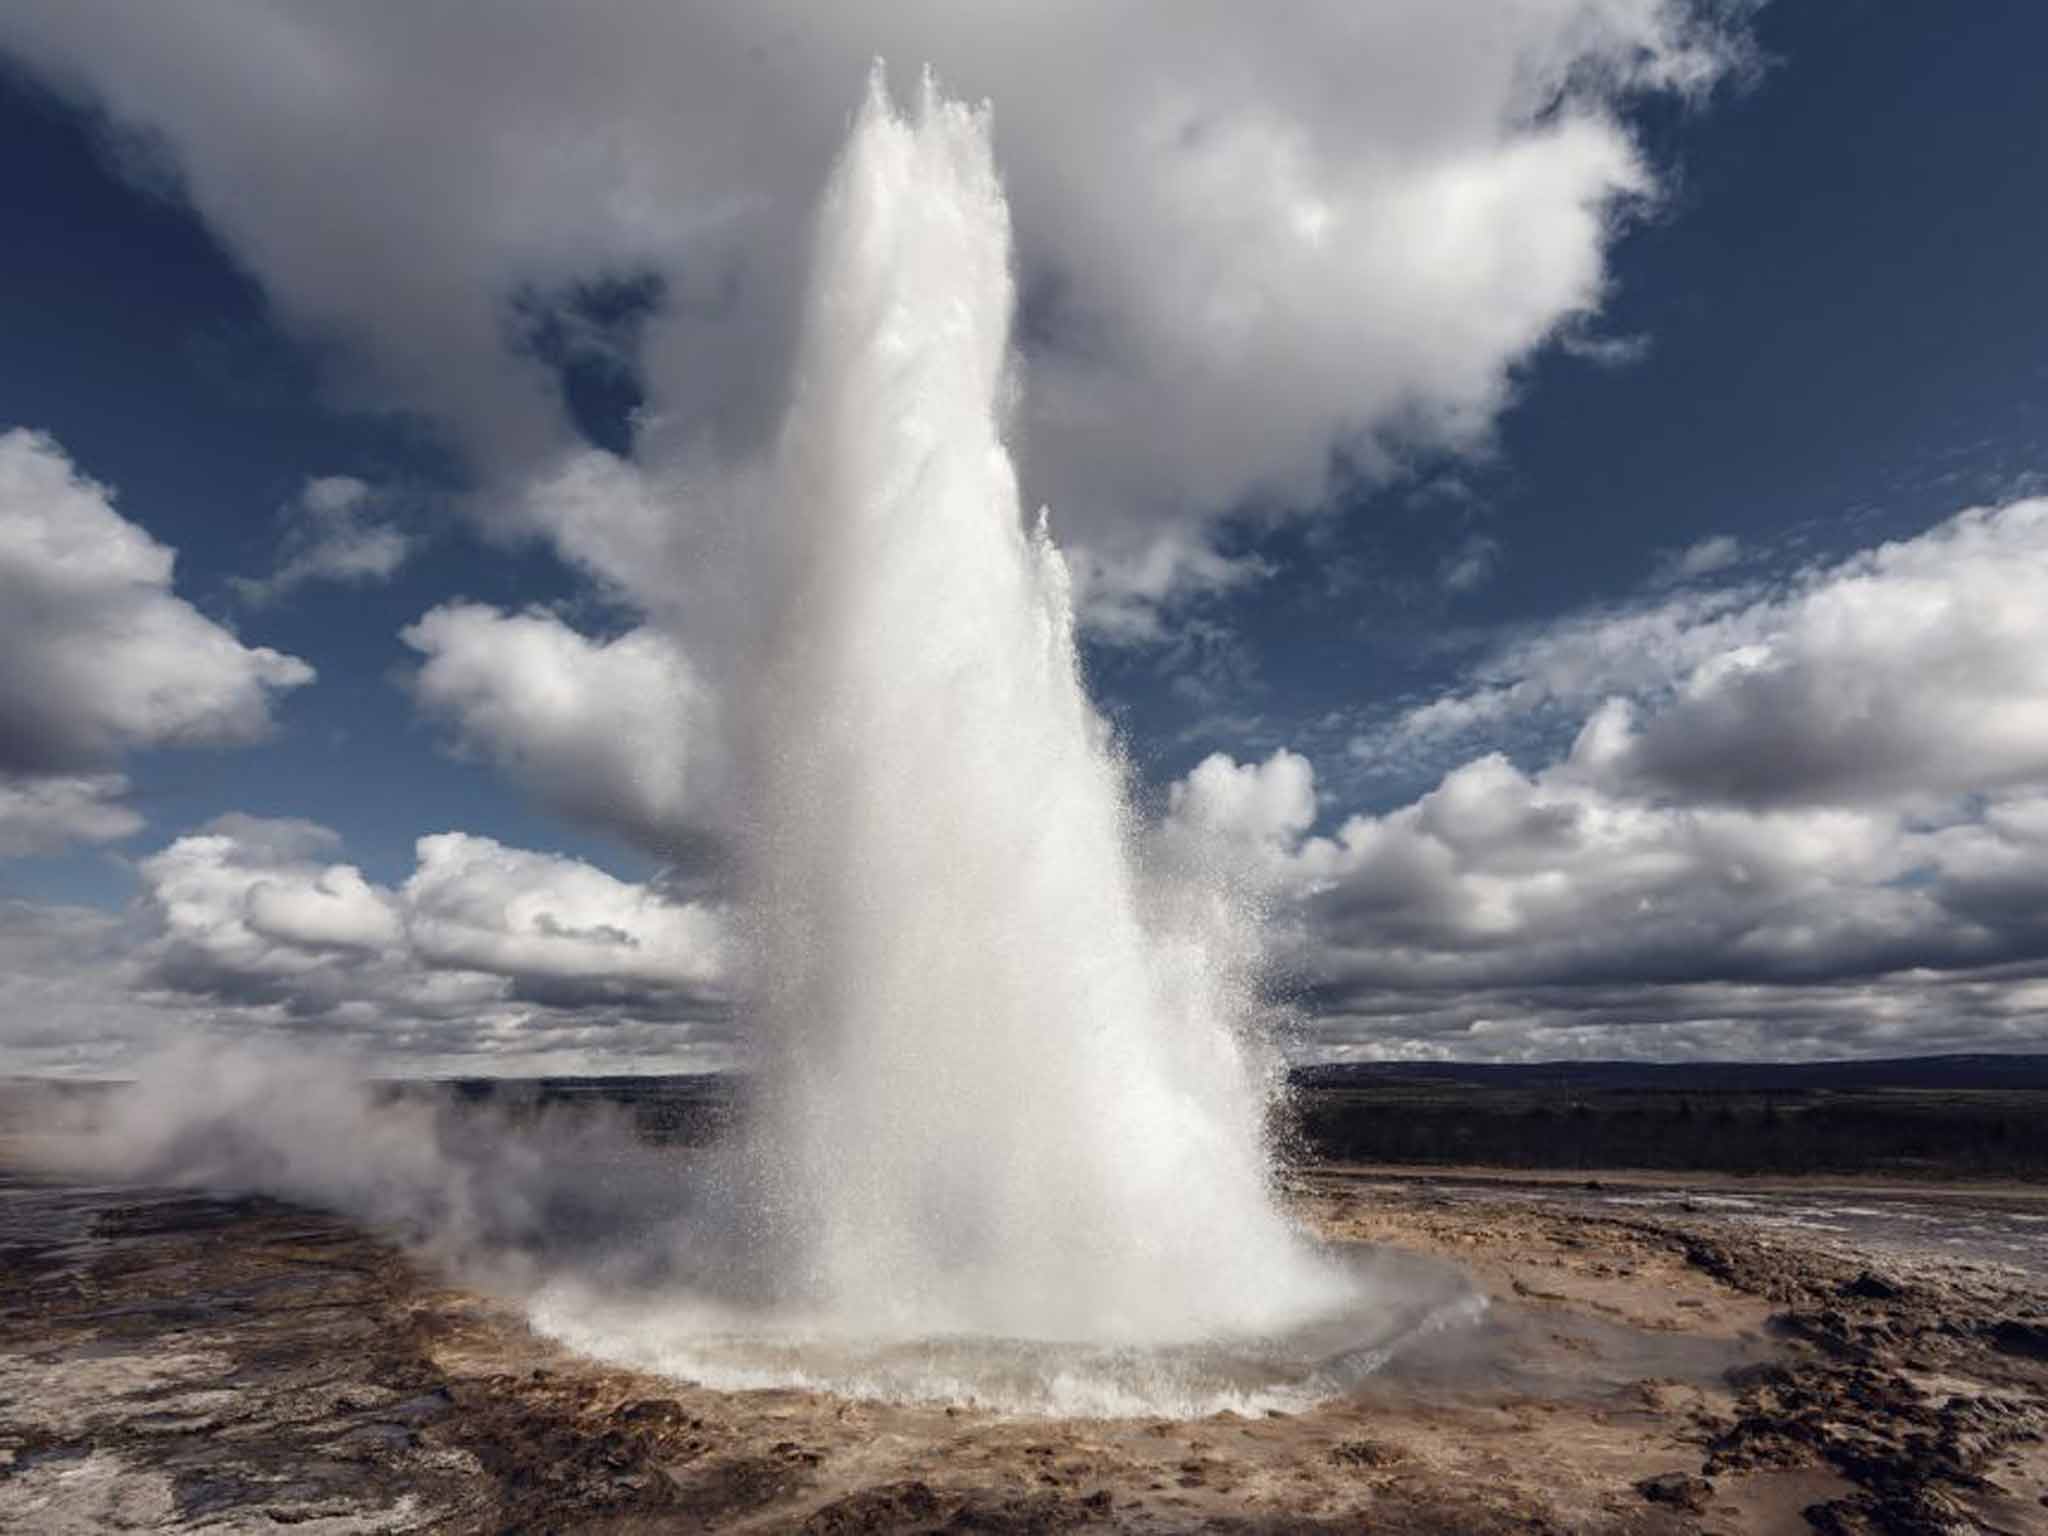 An erupting geyser